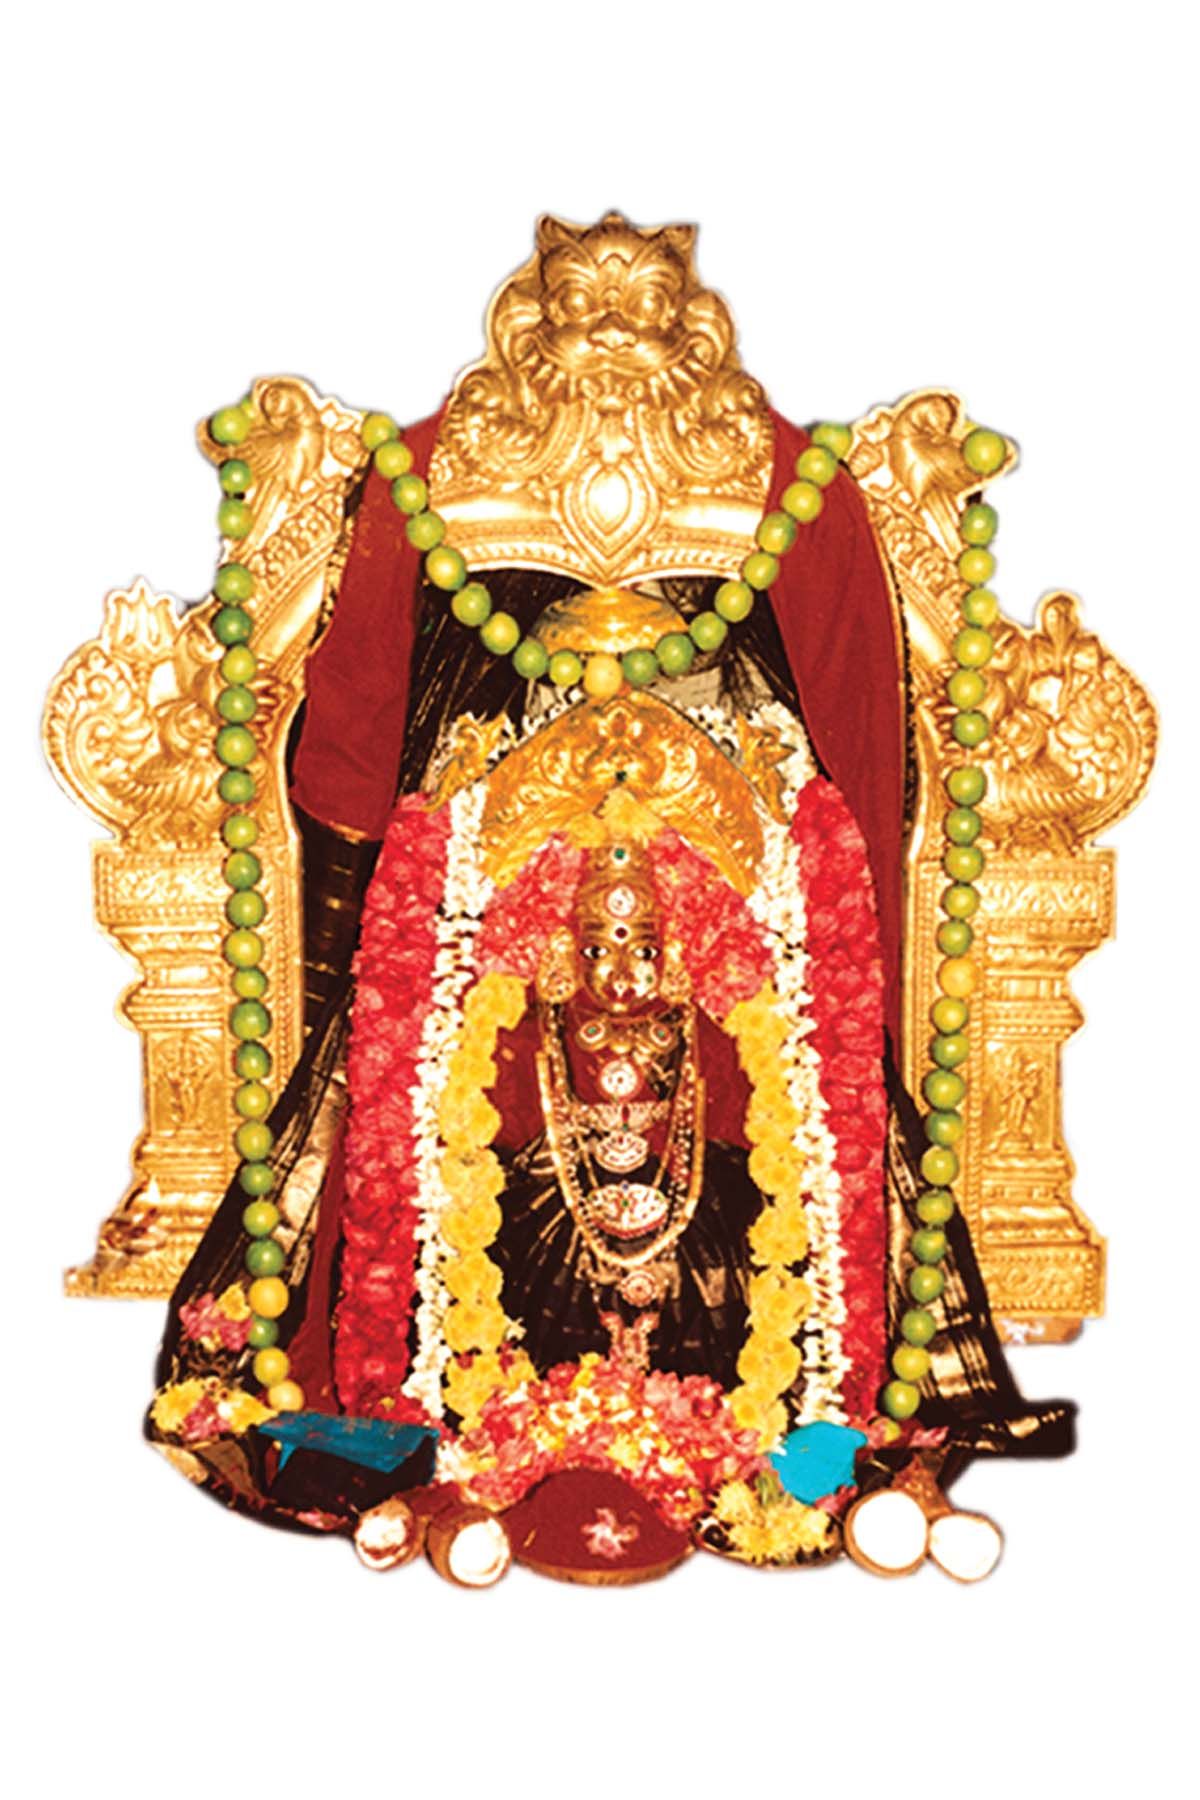 Sri Bhramaramba Mallikarjuna Swamy Temple, Srisailam, Andhra Pradesh